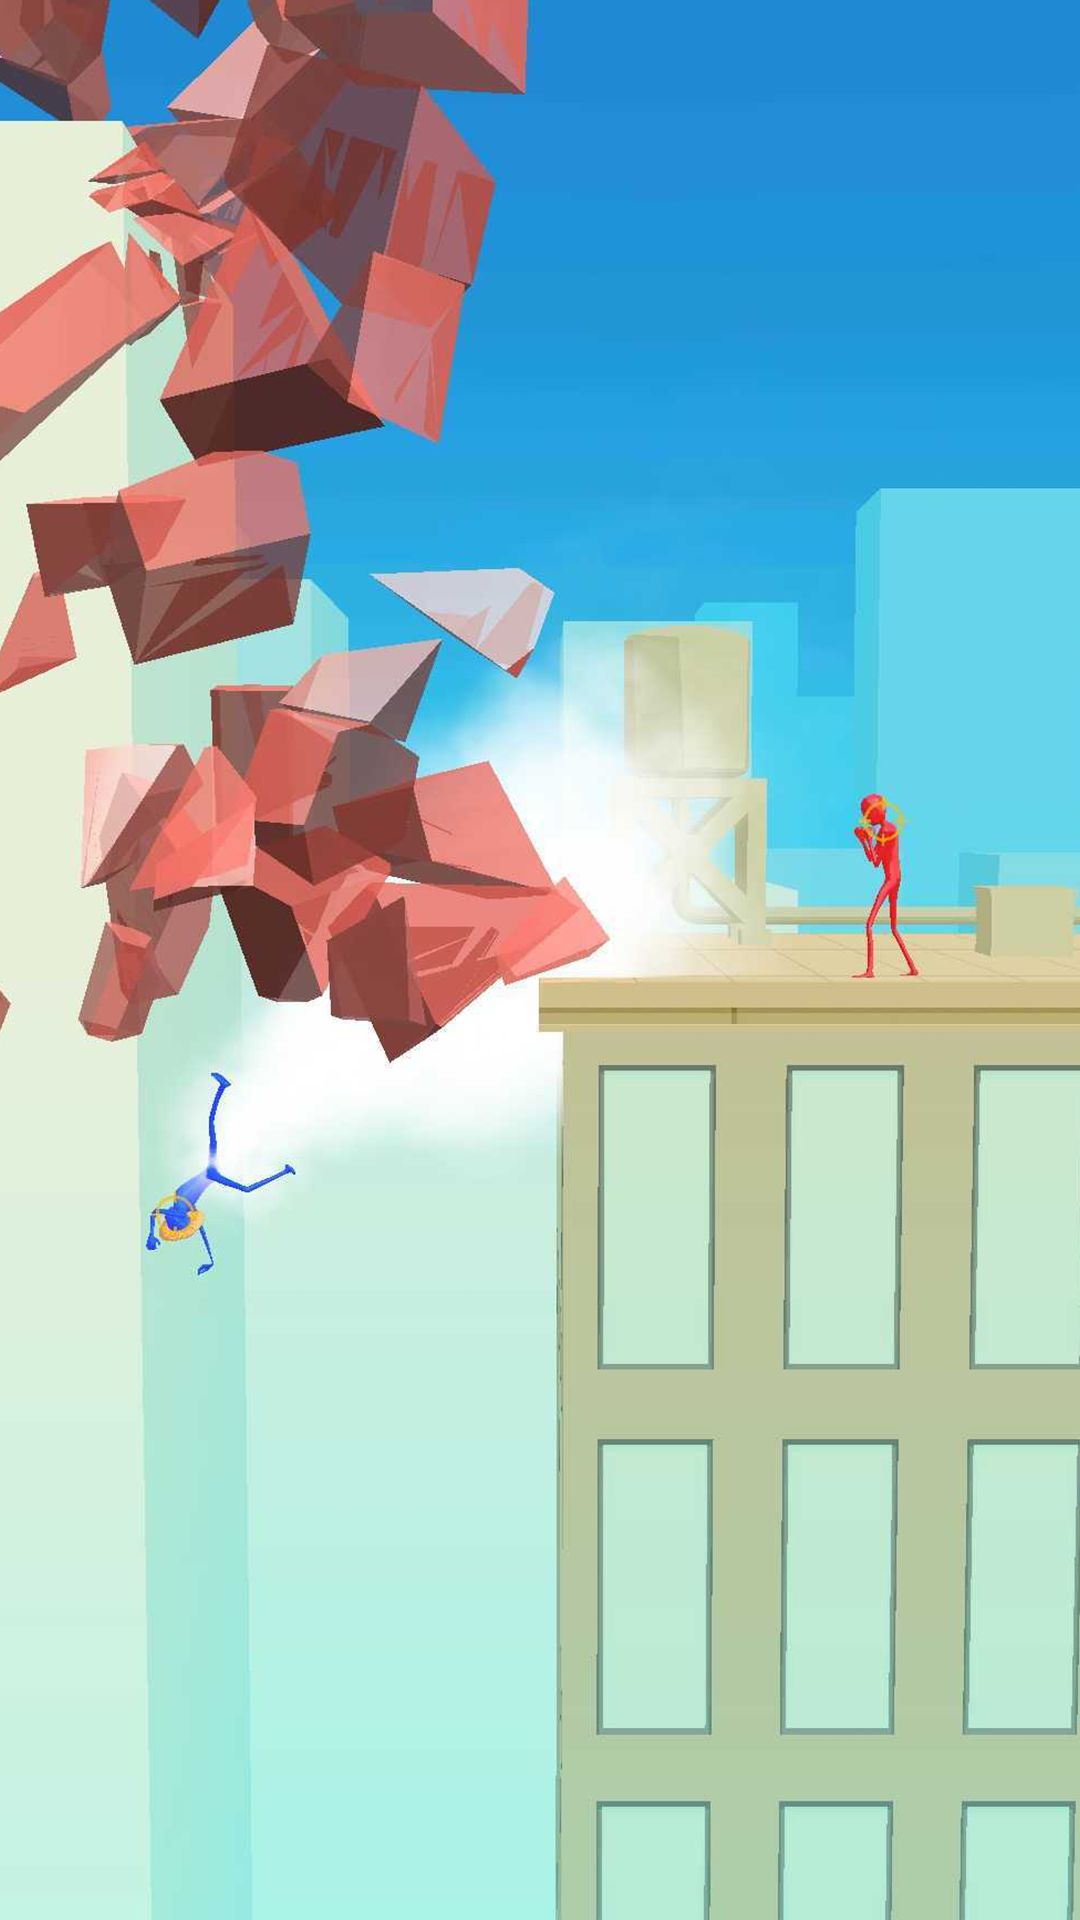 Gum Gum Battle - Android game screenshots.